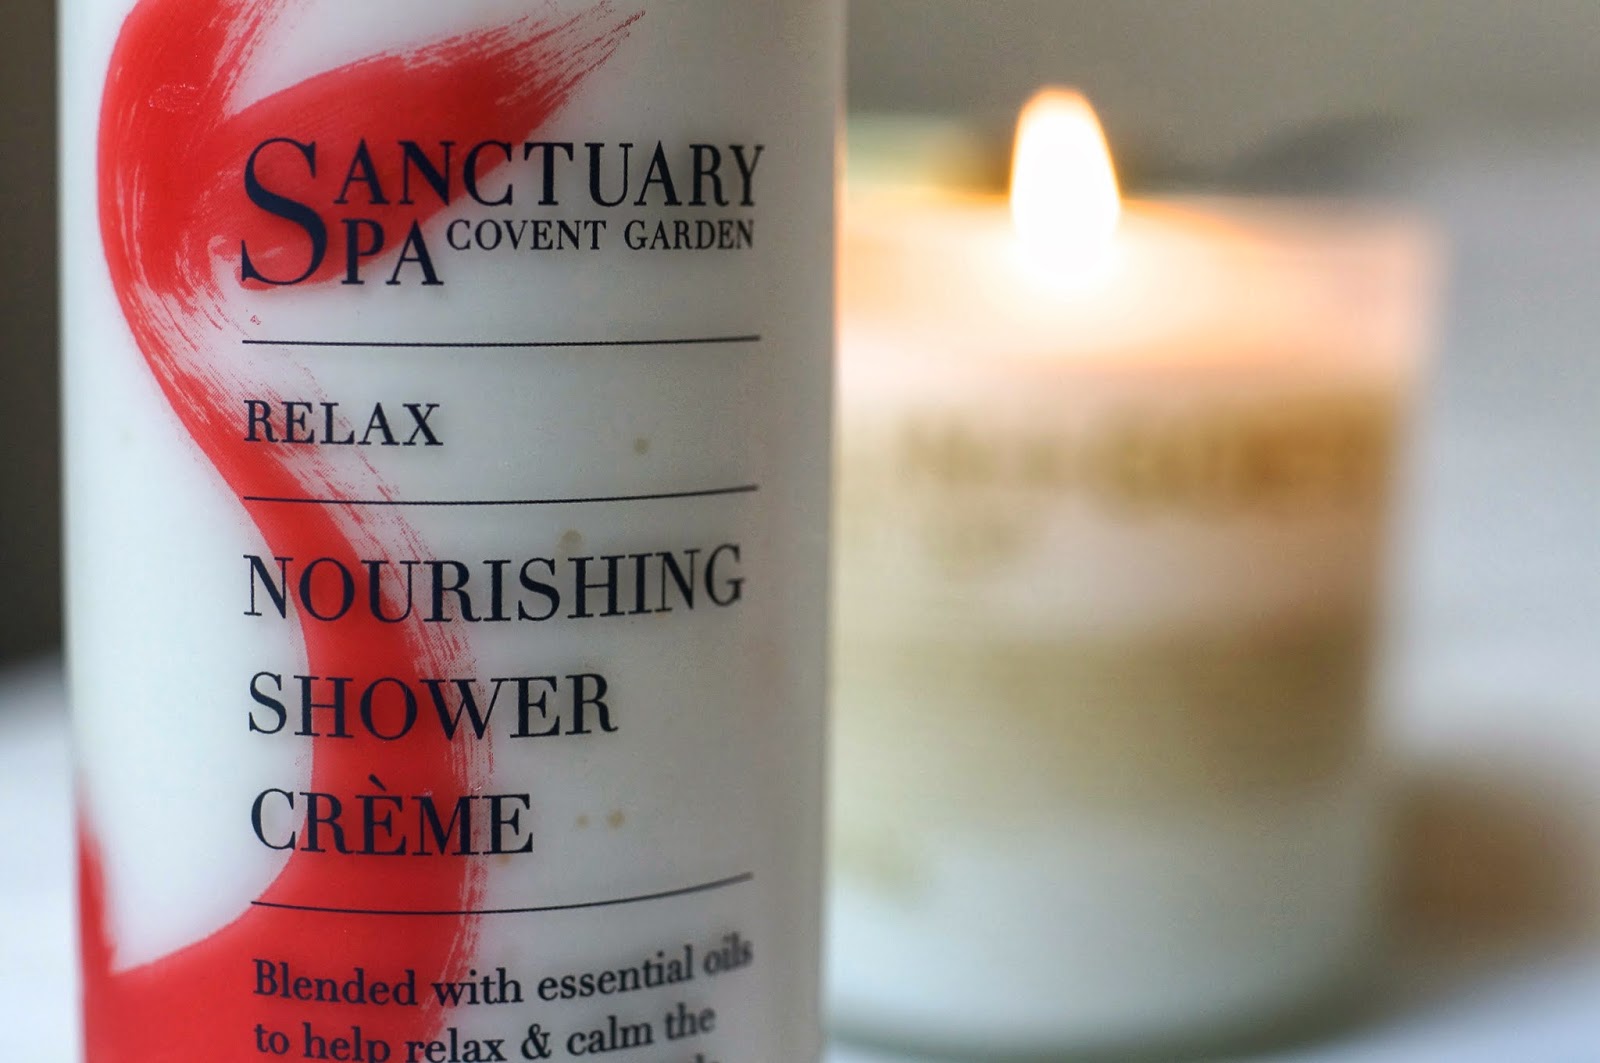 Sanctuary Spa Nourishing Shower Creme